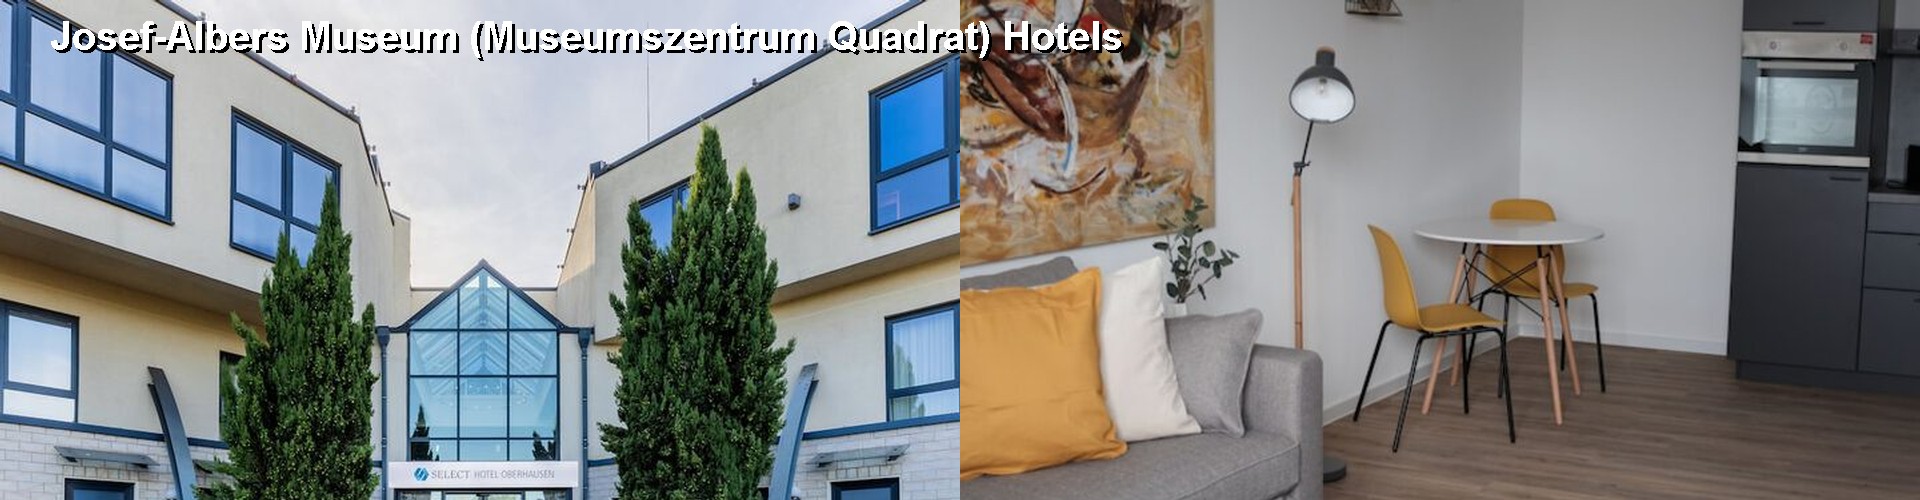 4 Best Hotels near Josef-Albers Museum (Museumszentrum Quadrat)